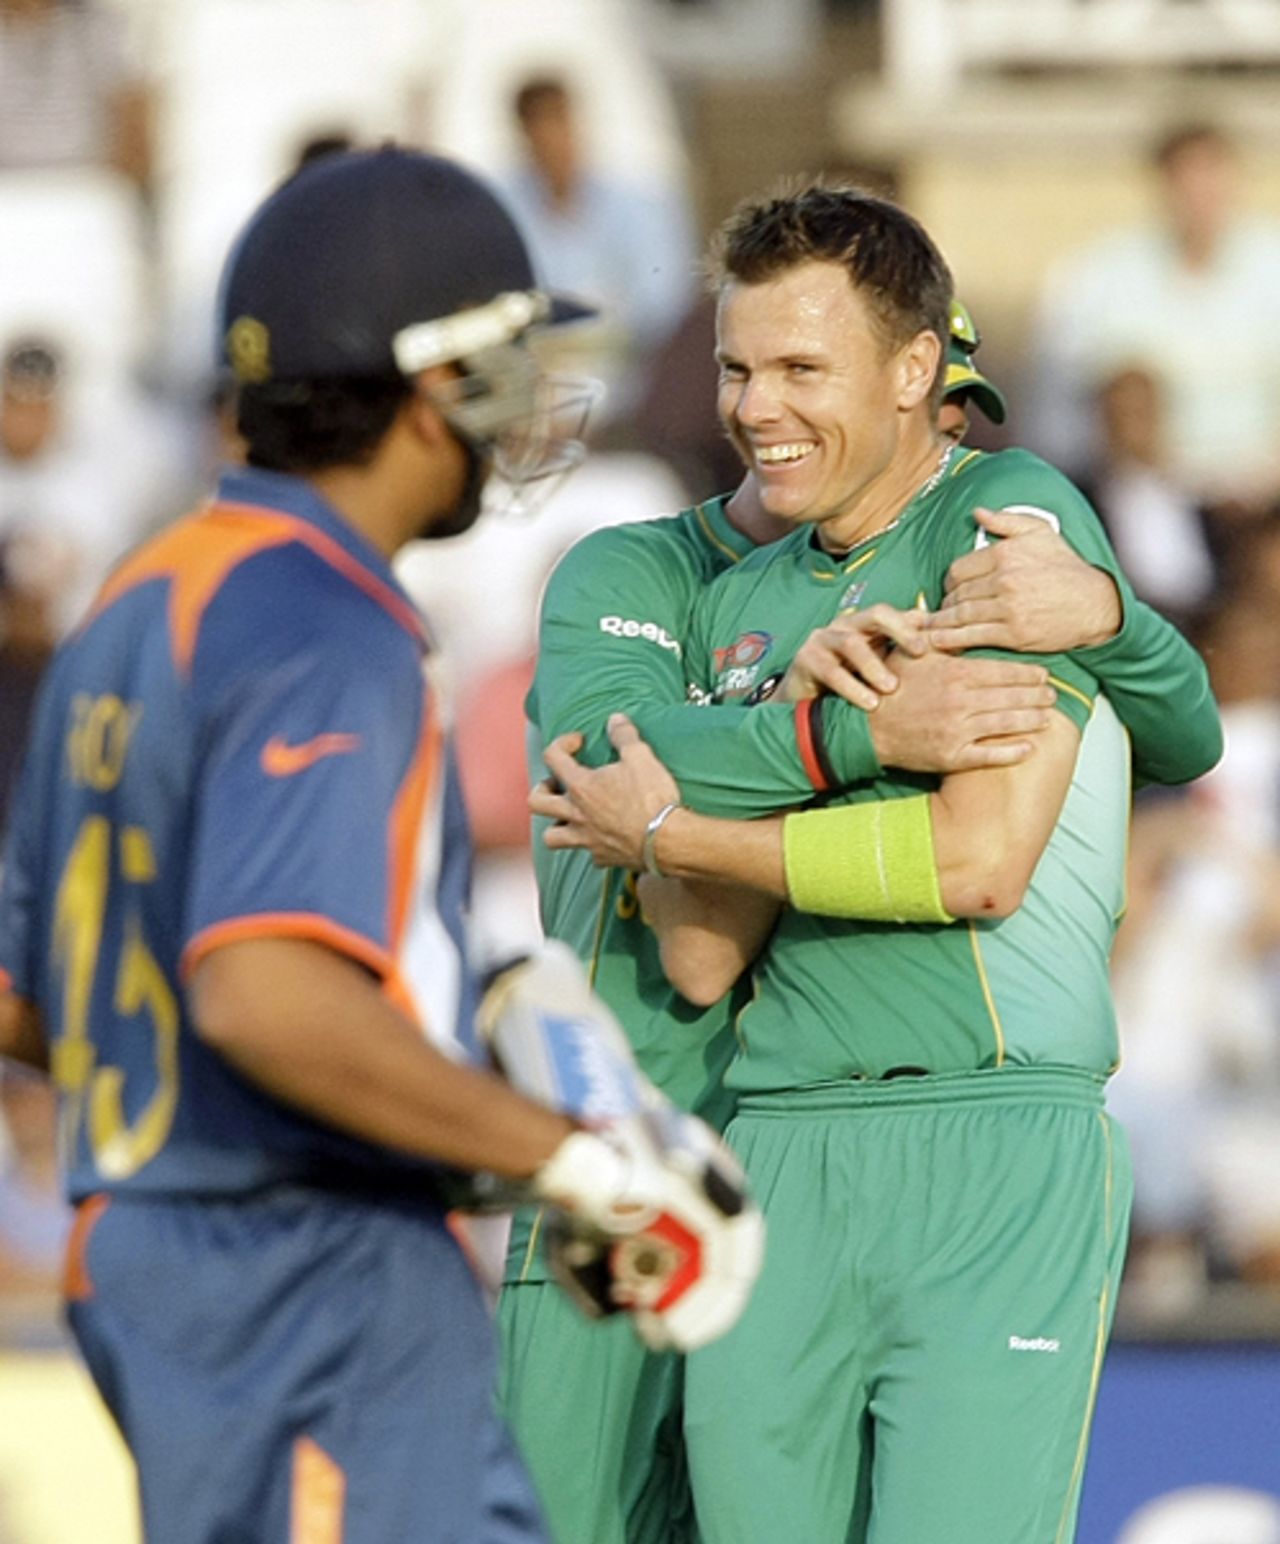 Johan Botha picked up 3 for 16, India v South Africa, ICC World Twenty20 Super Eights, Trent Bridge, June 16, 2009 